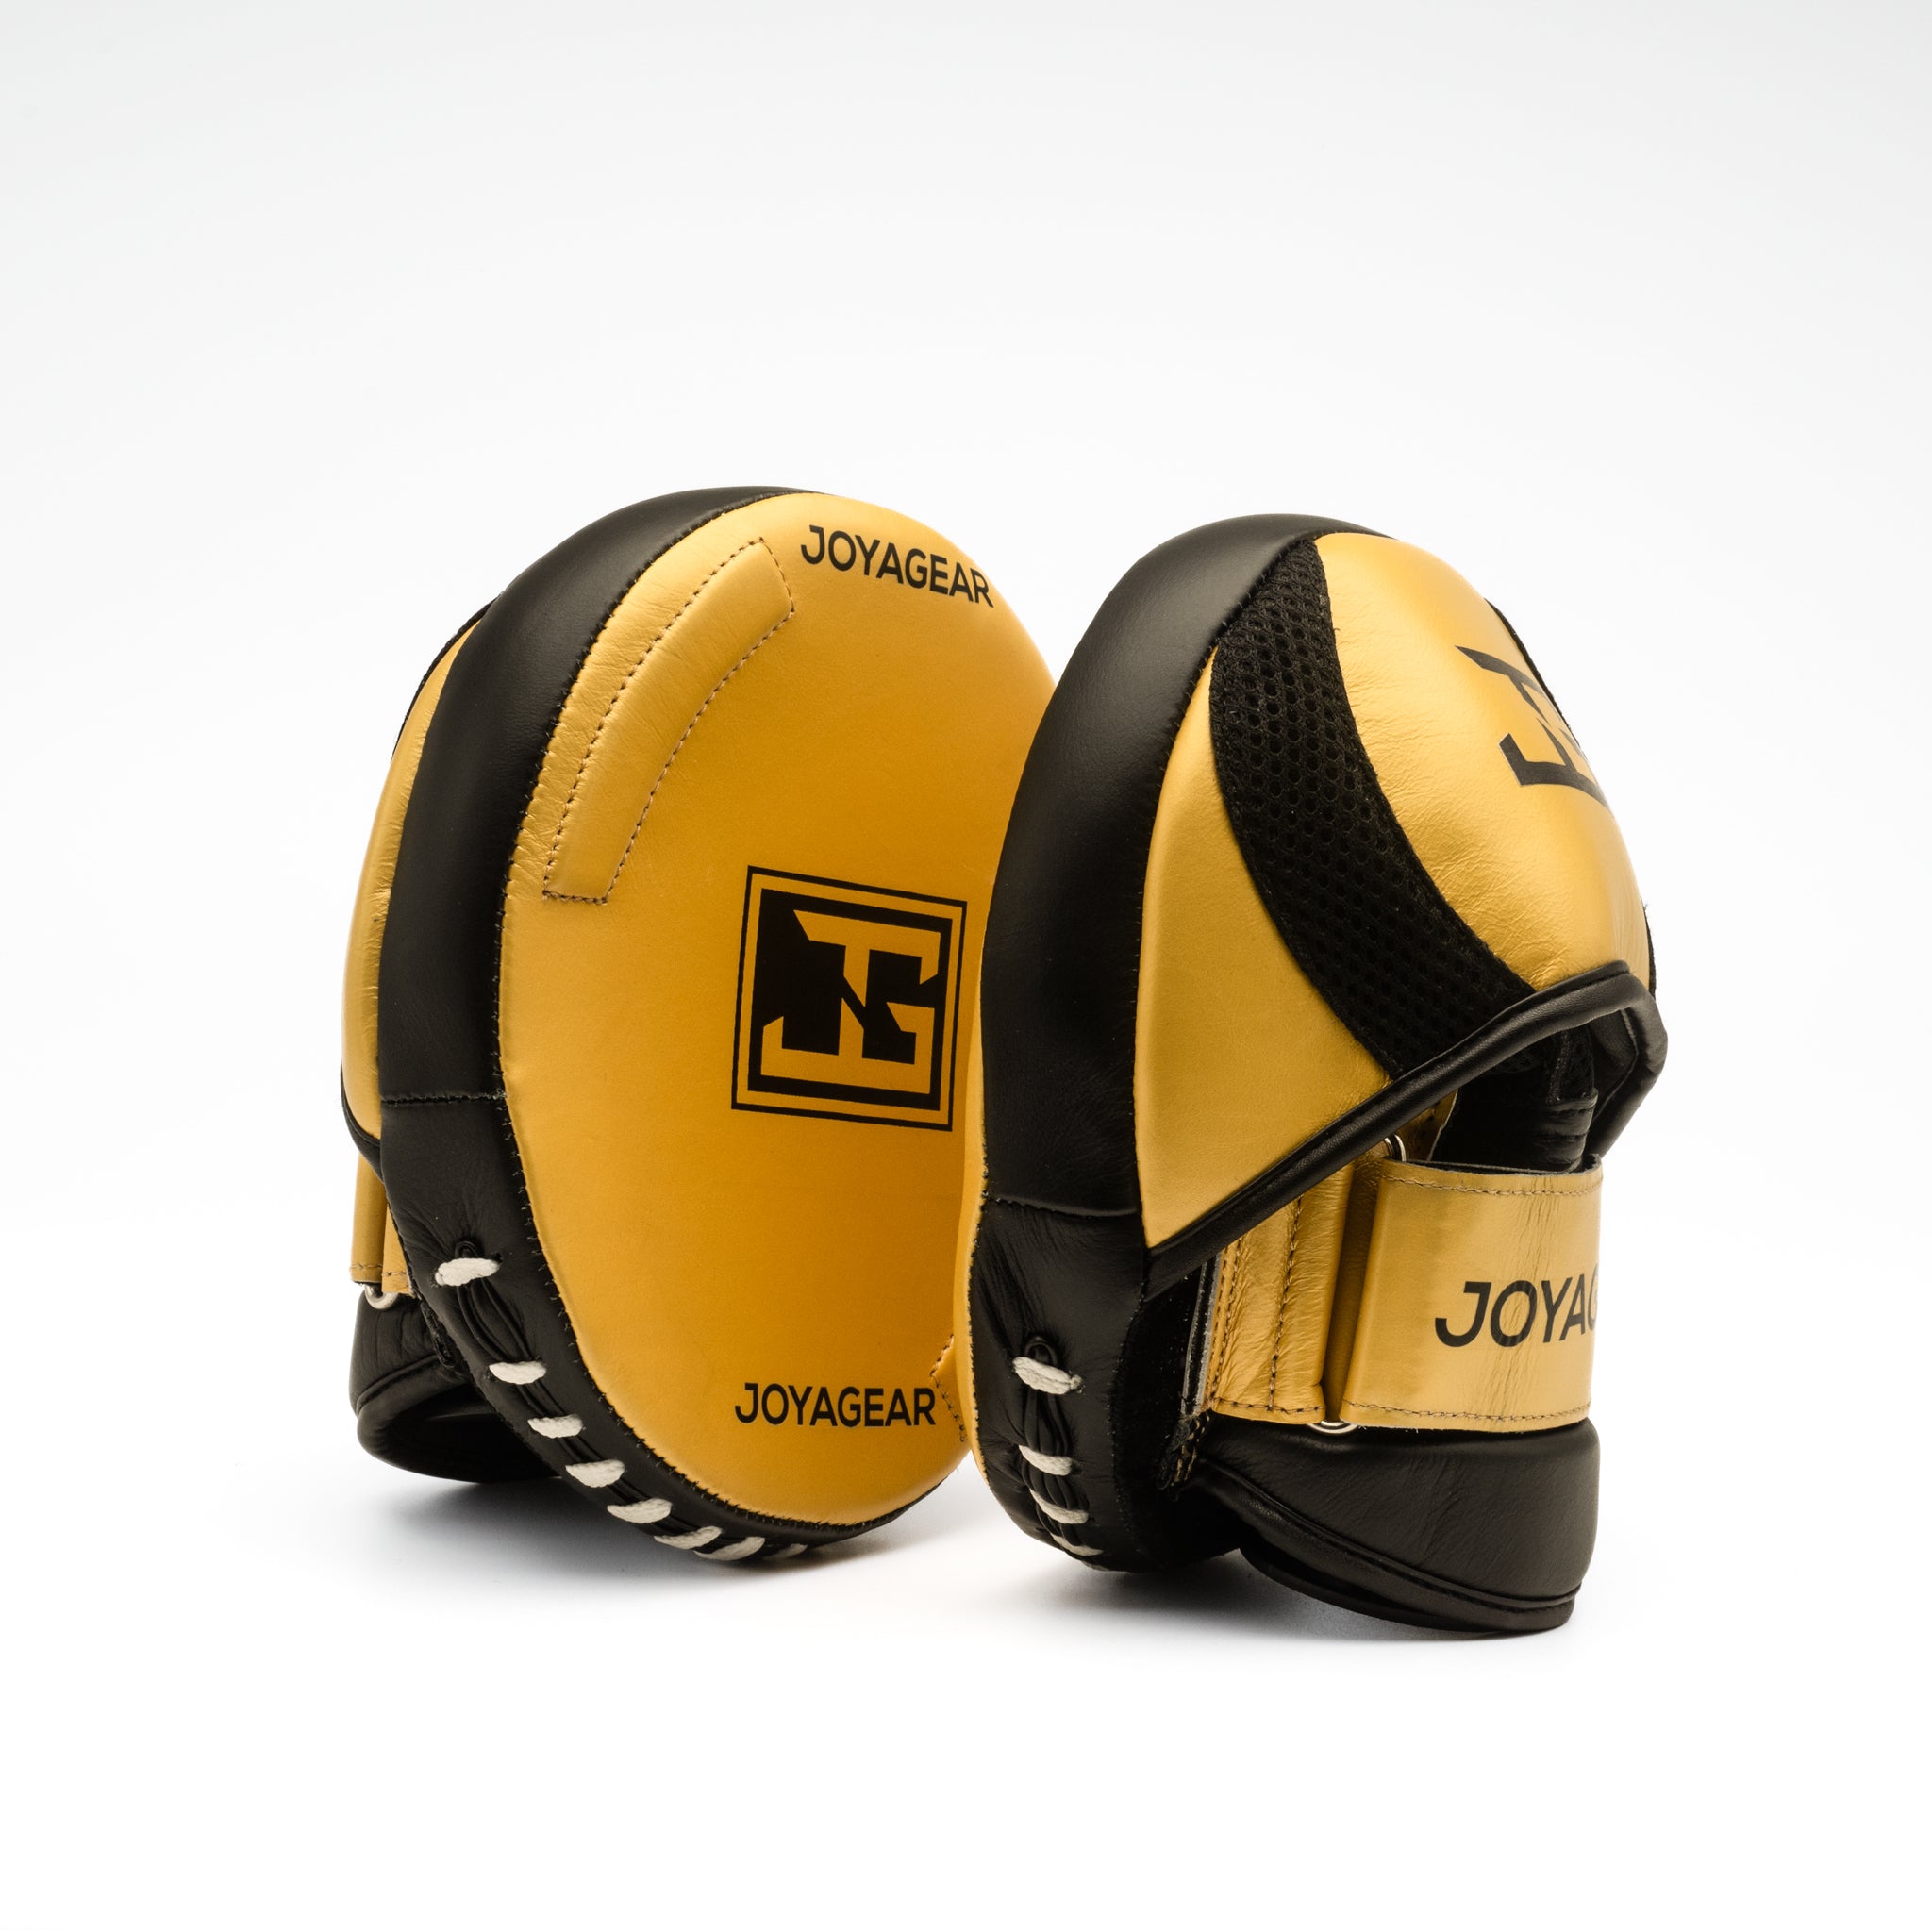 Joyagear Strike Boxing Pads - Black/Gold